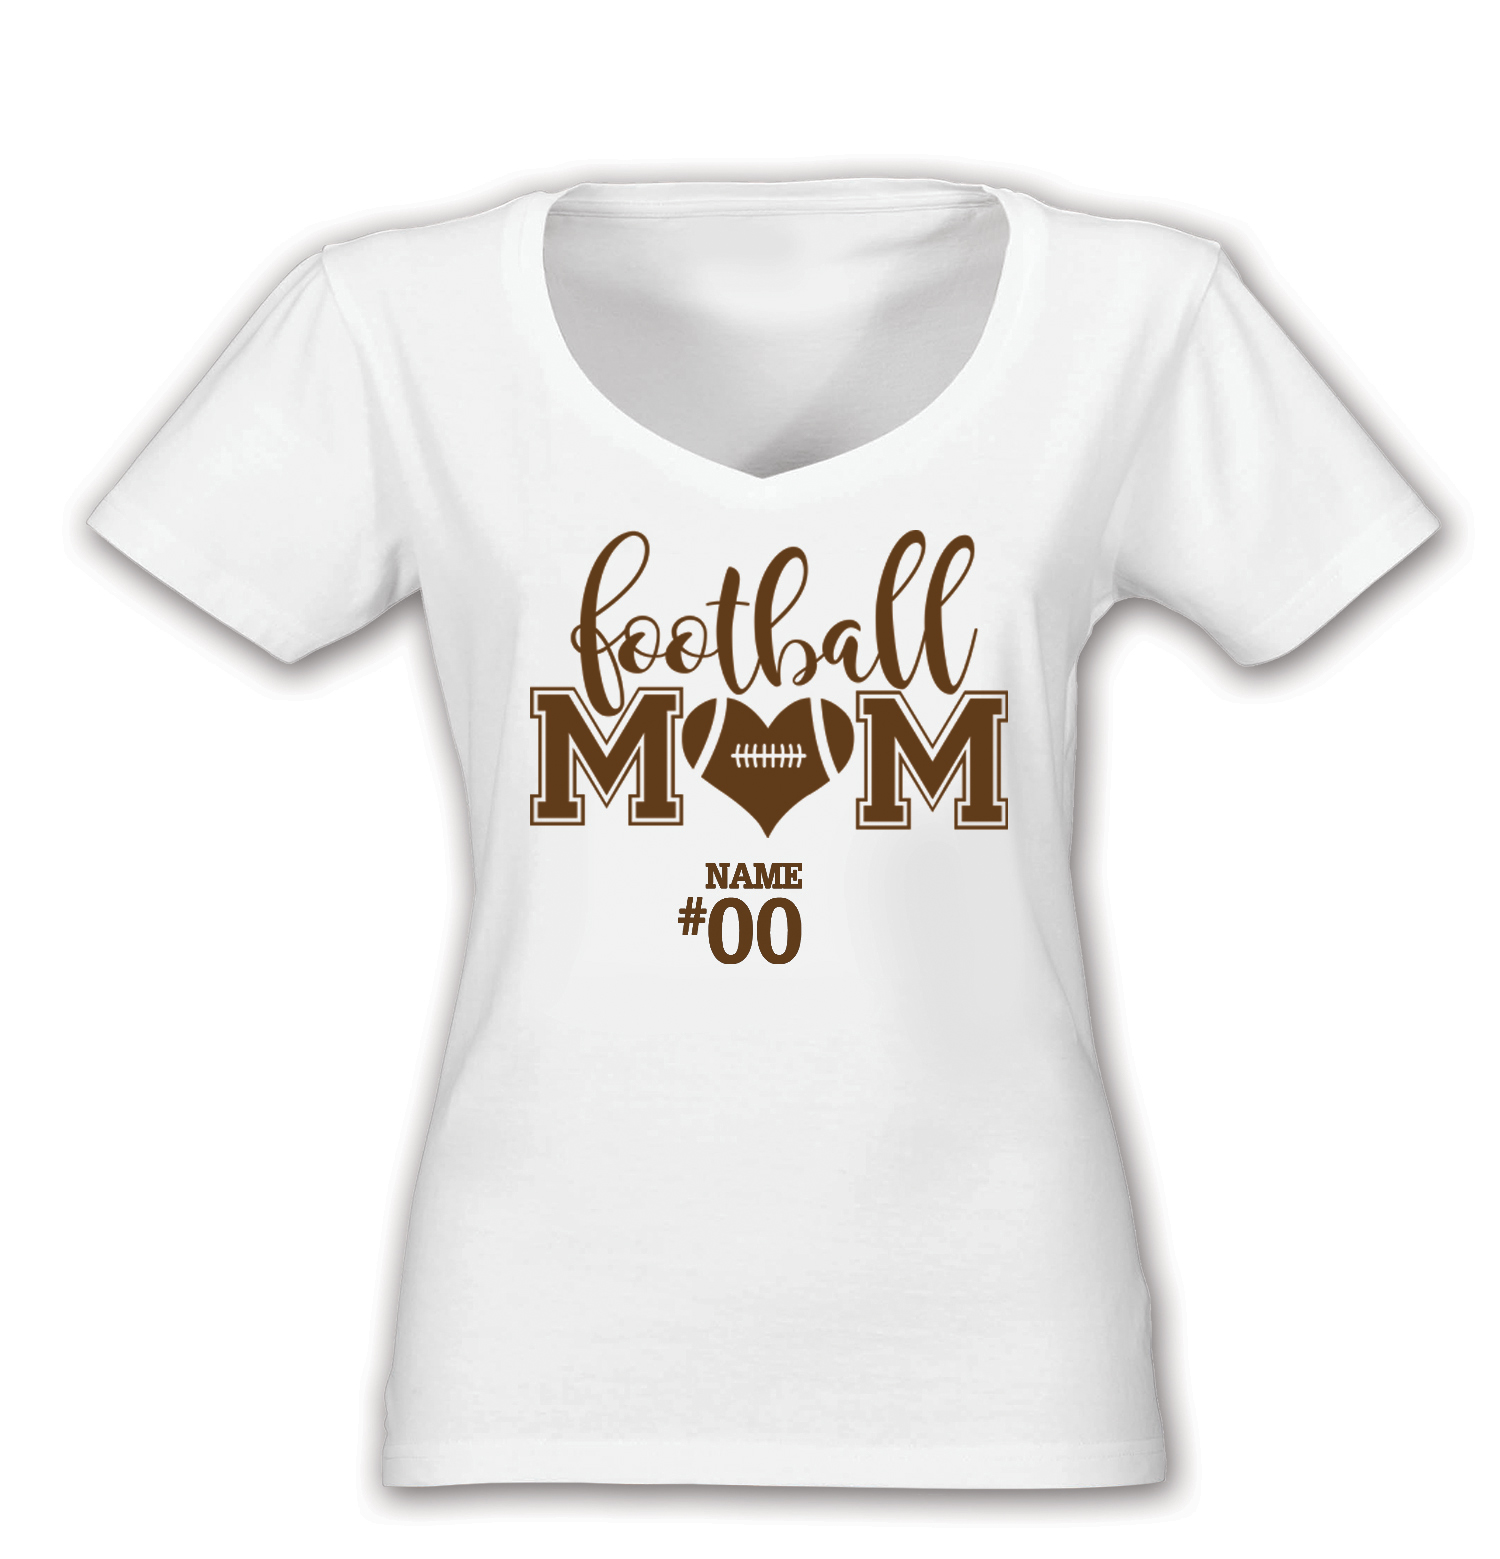 Football Mom Shirt - Moms For Sports